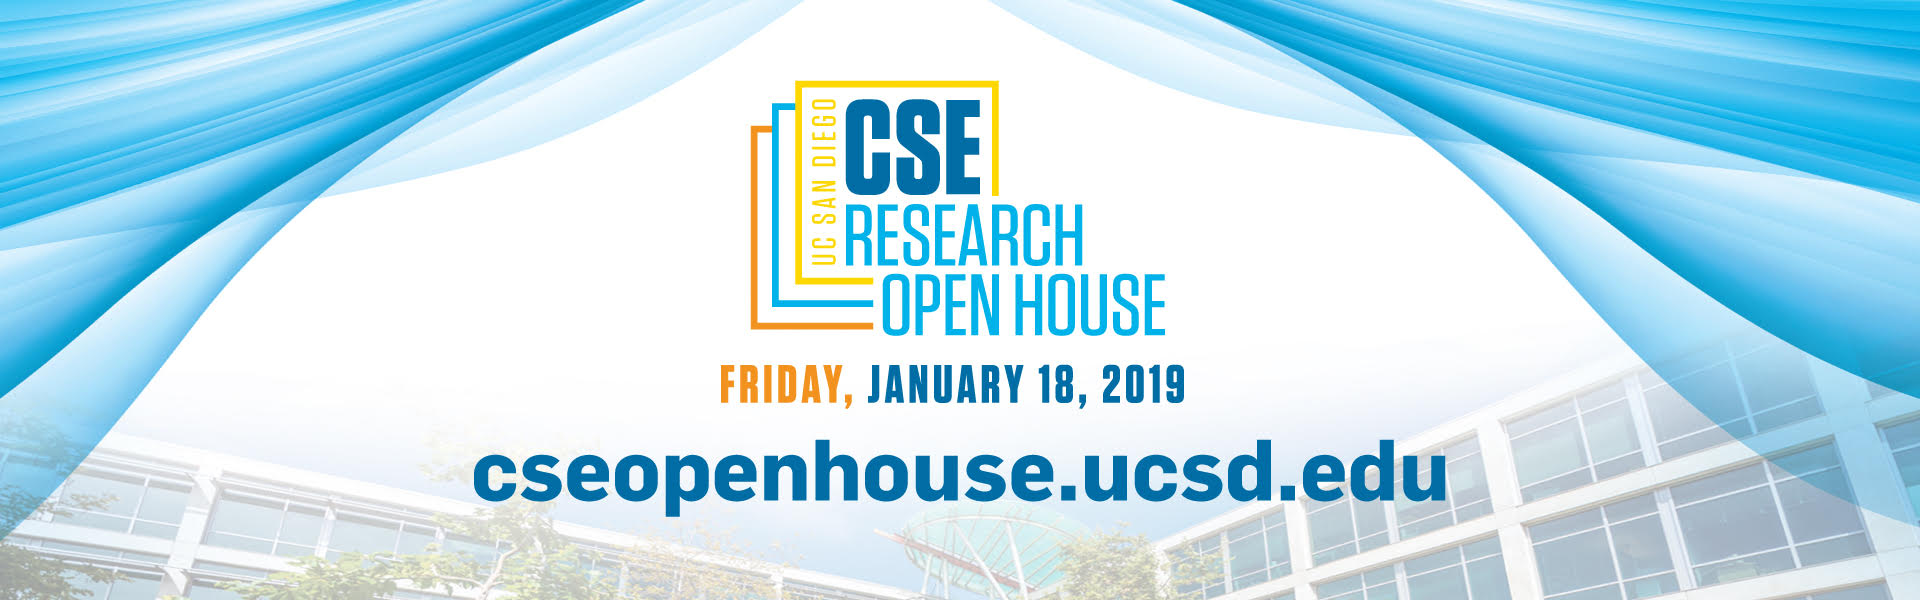 CSE Research Open House